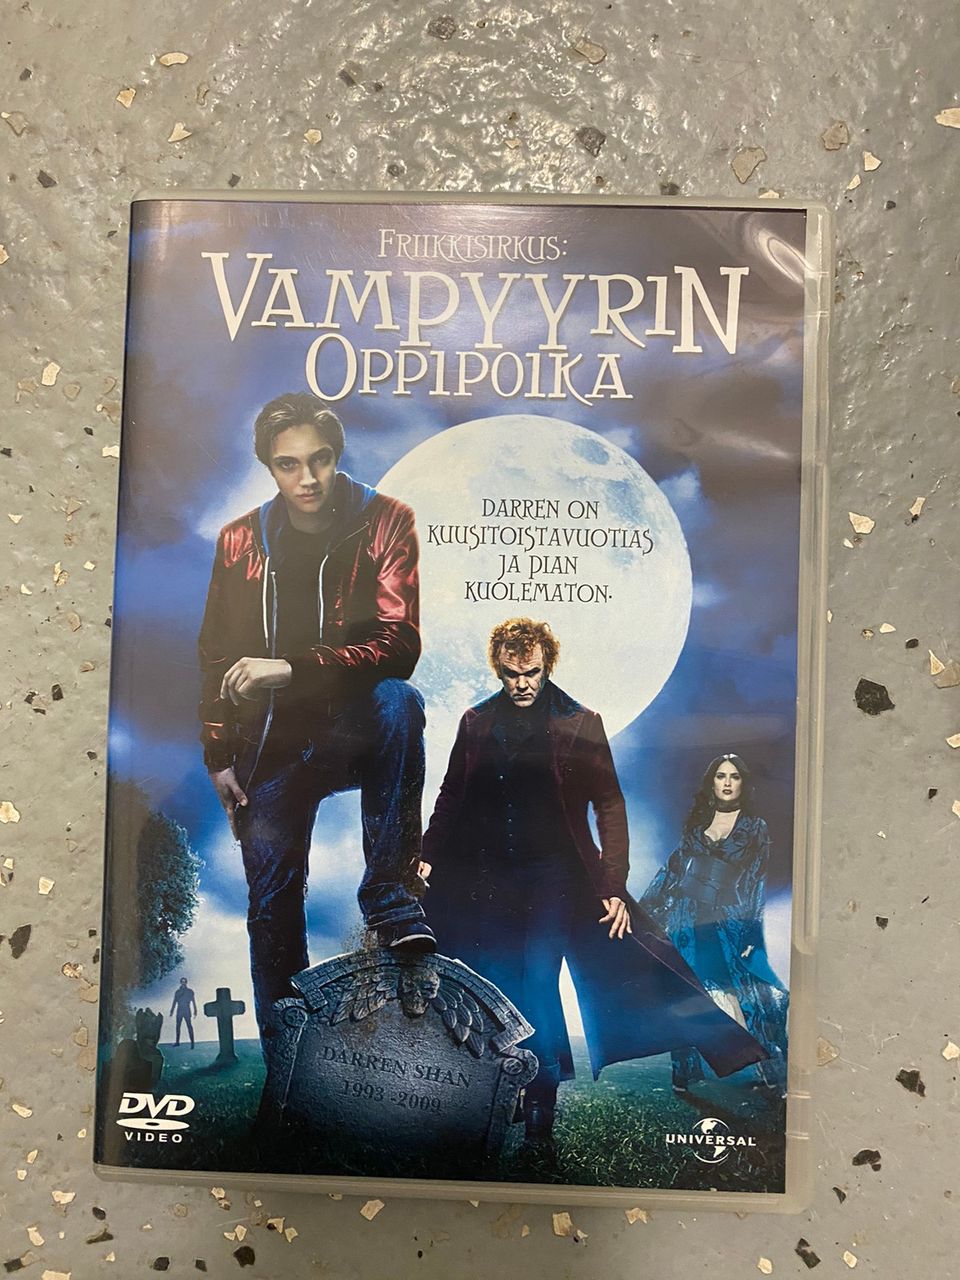 Vampyyrin oppipoika dvd